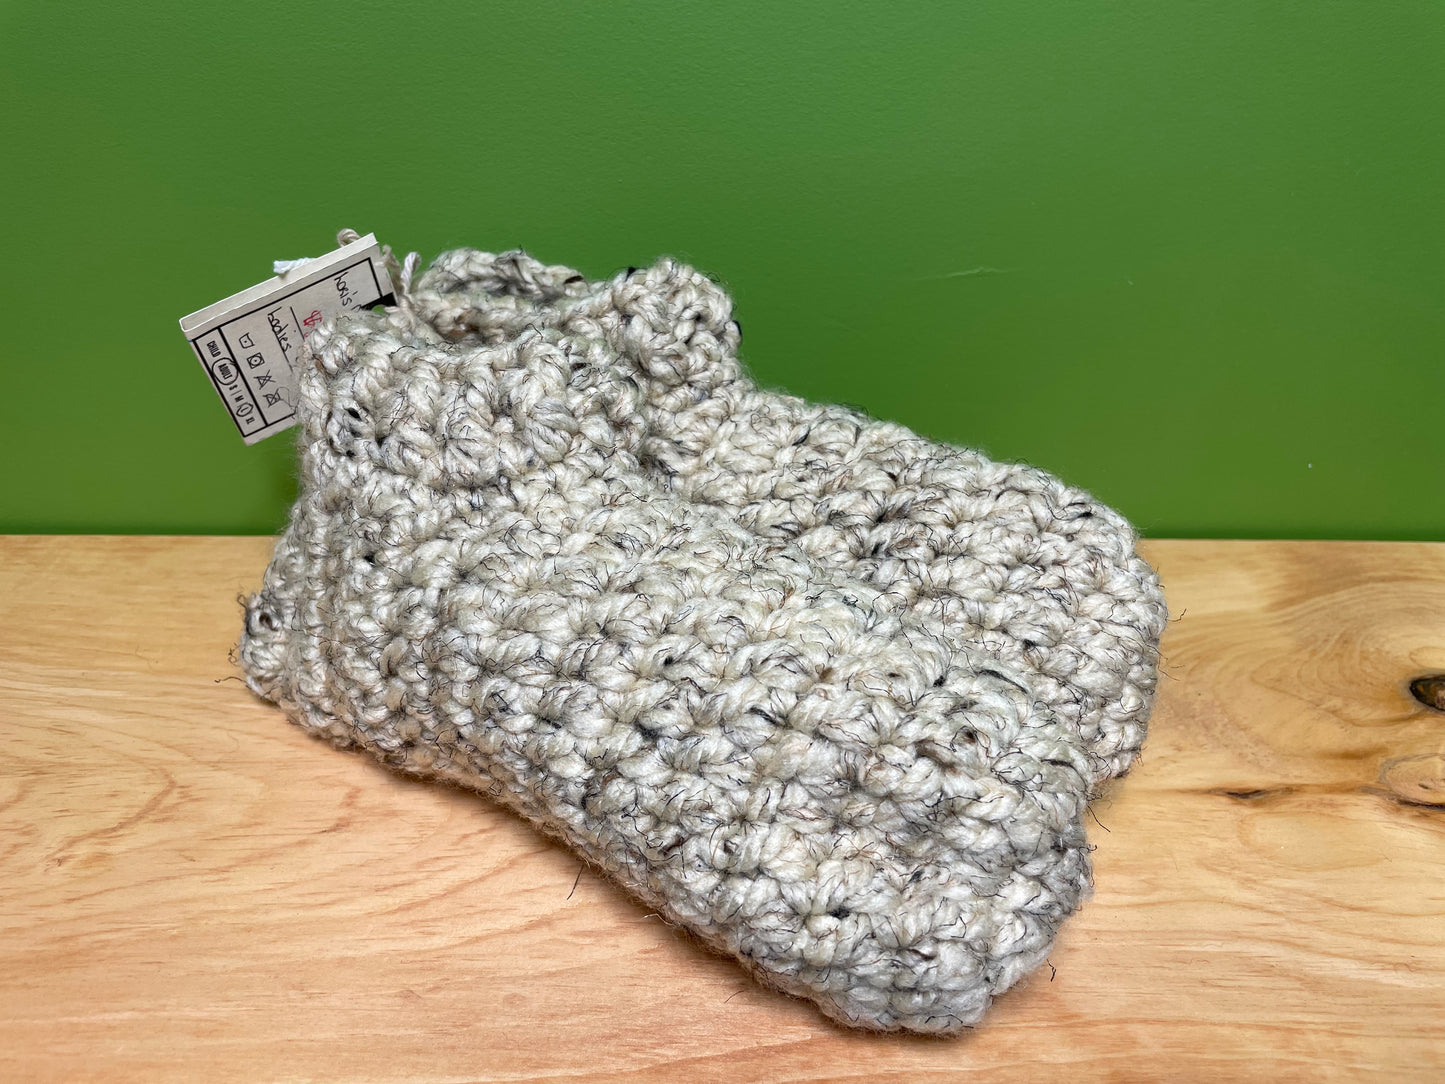 Women’s Crochet Slippers